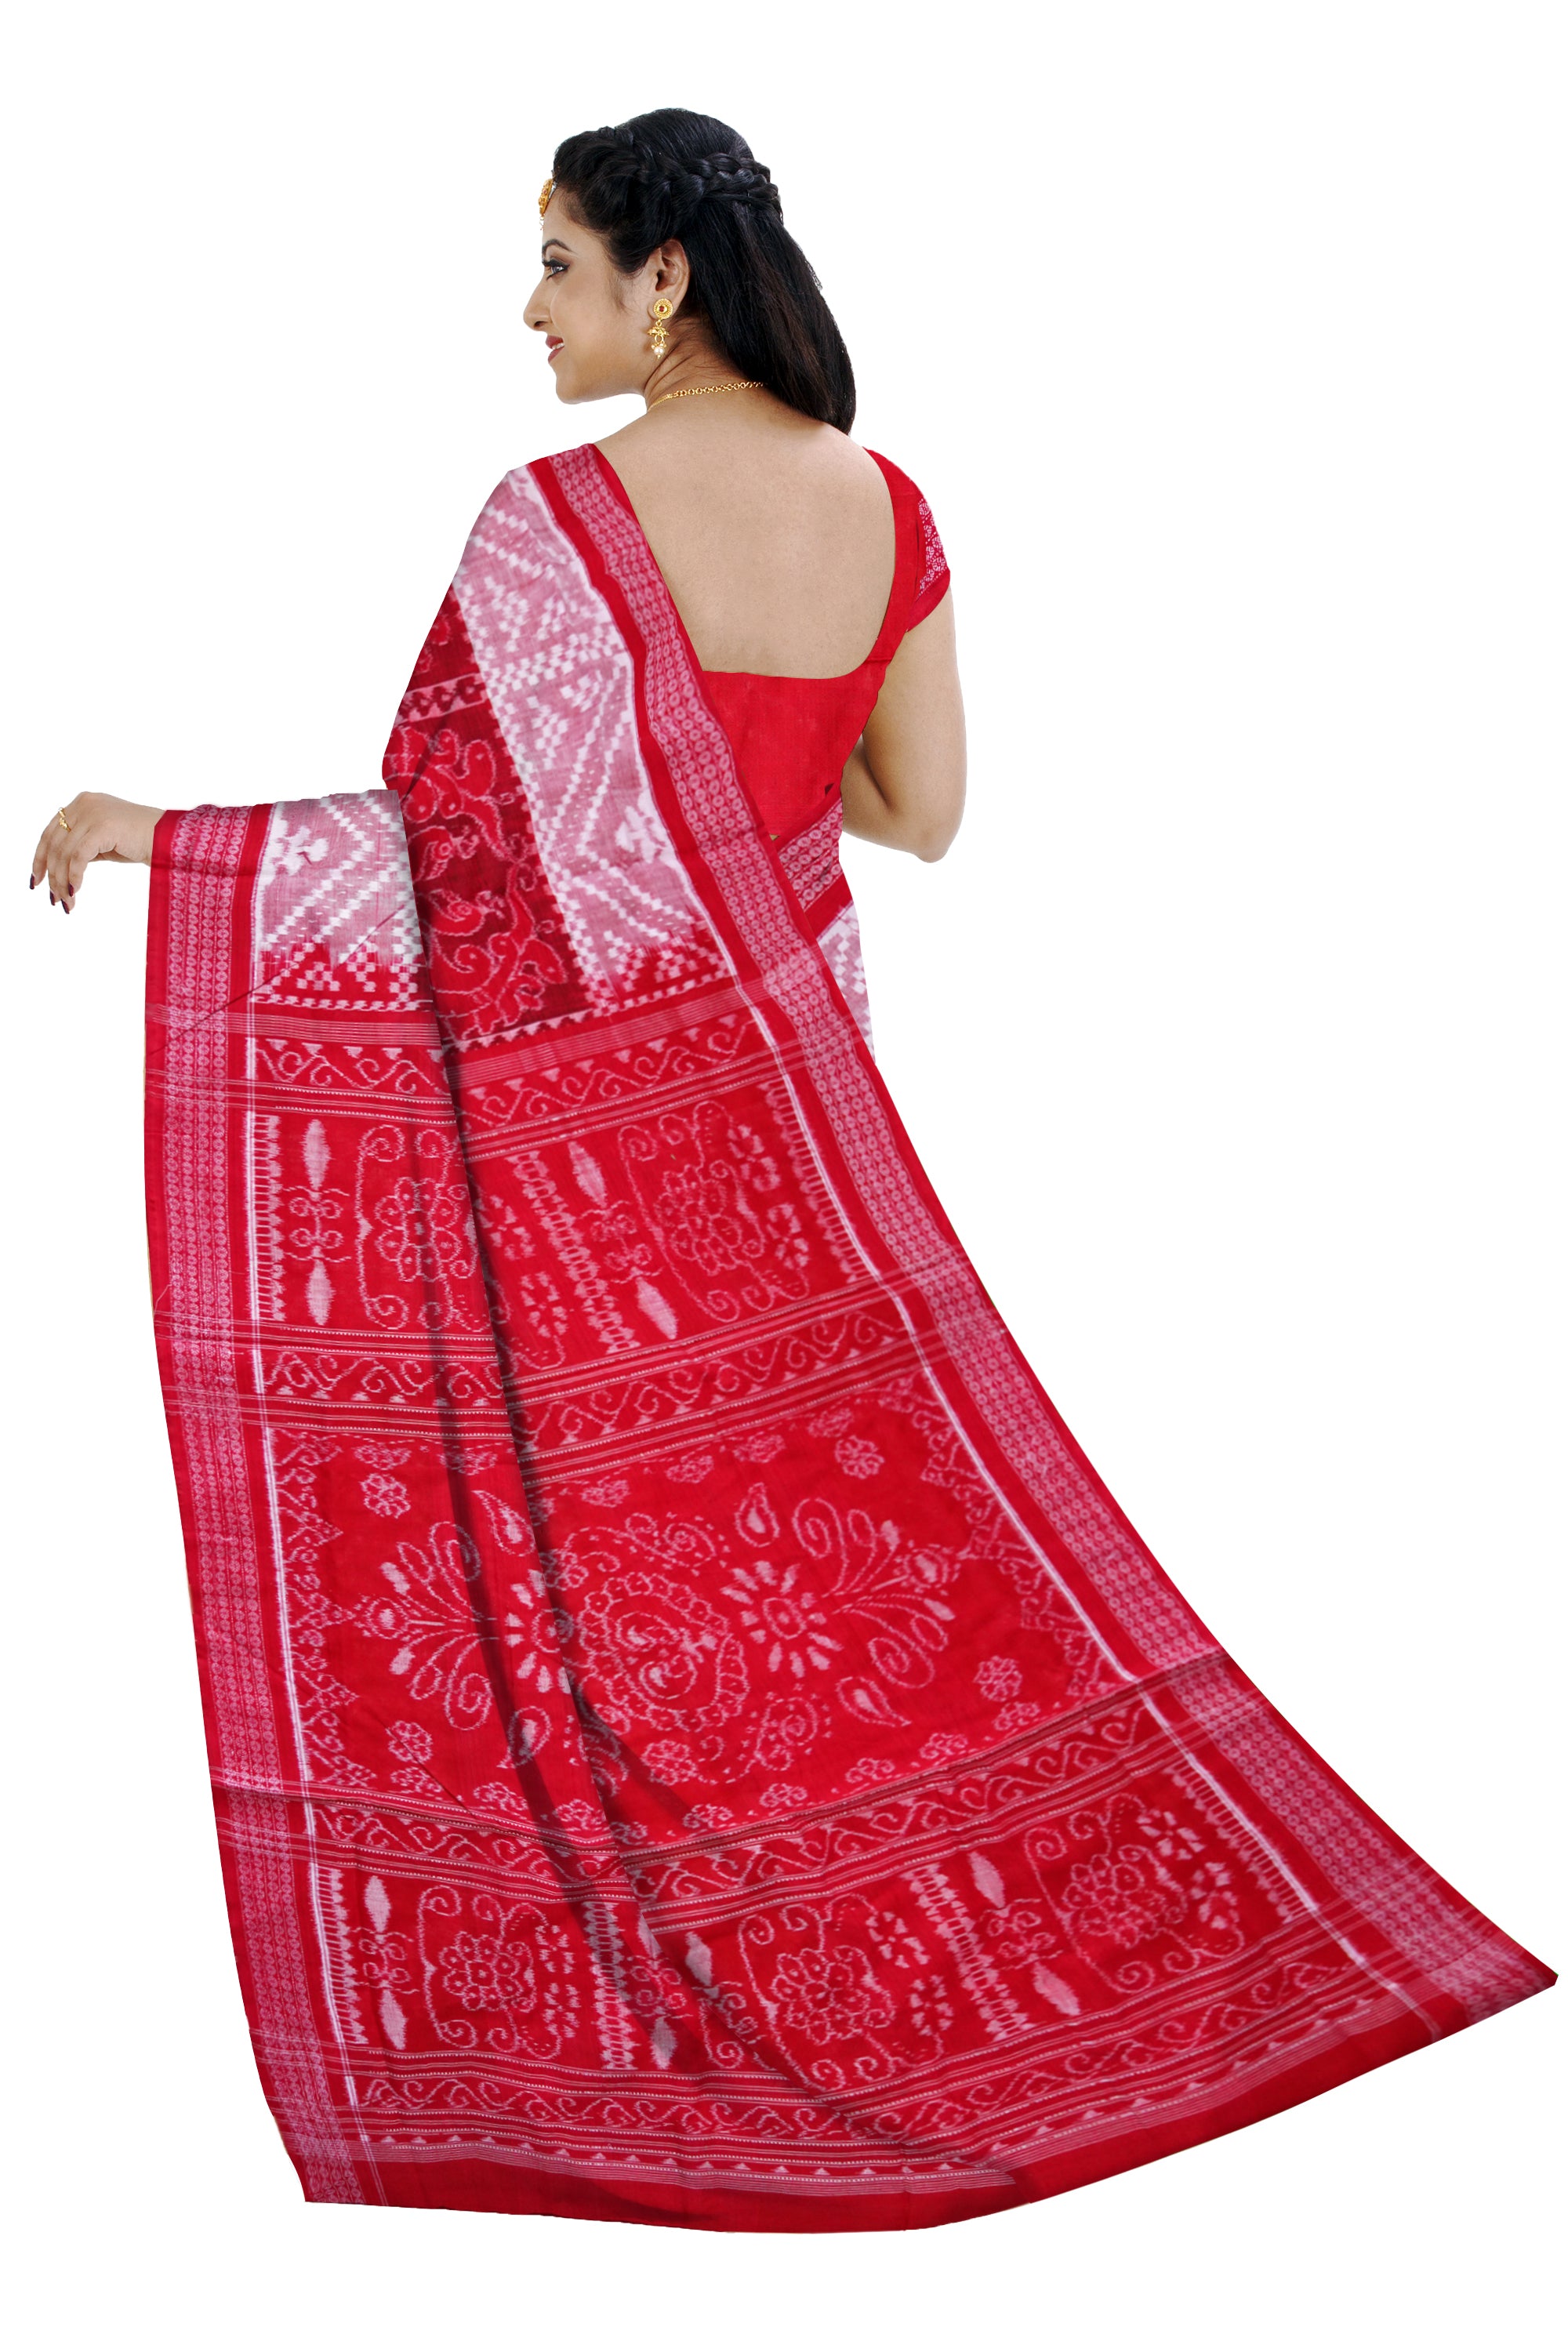 Peacock and small pasapali pattern Sambalpuri cotton saree is white and red color. - Koshali Arts & Crafts Enterprise